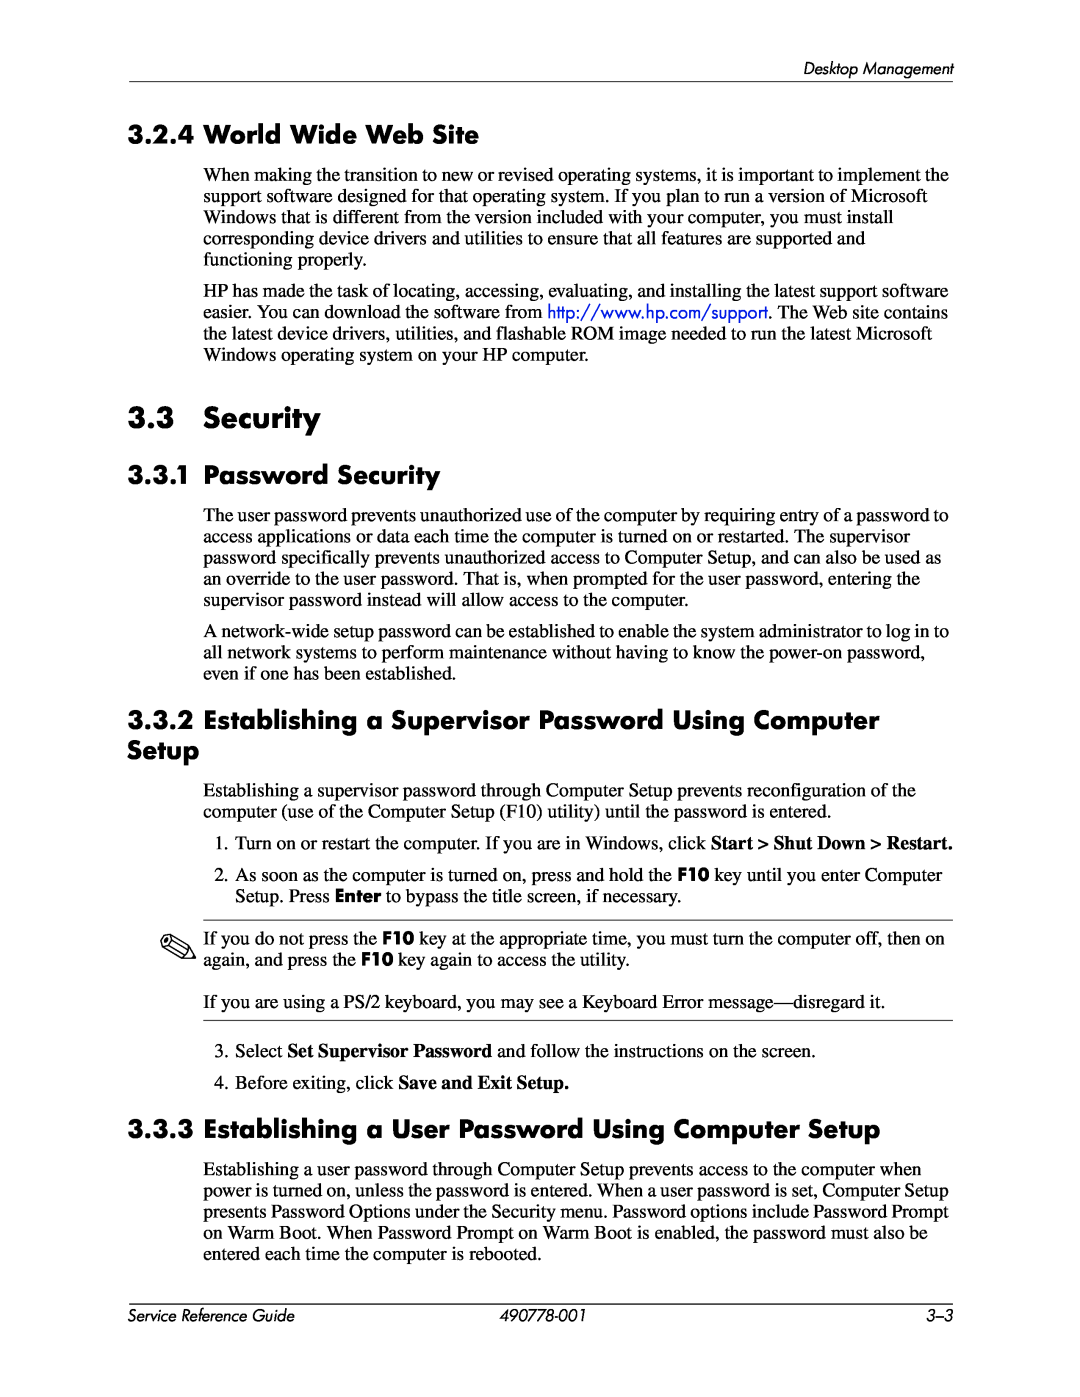 HP dx2310 manual World Wide Web Site, Password Security, Establishing a Supervisor Password Using Computer Setup 